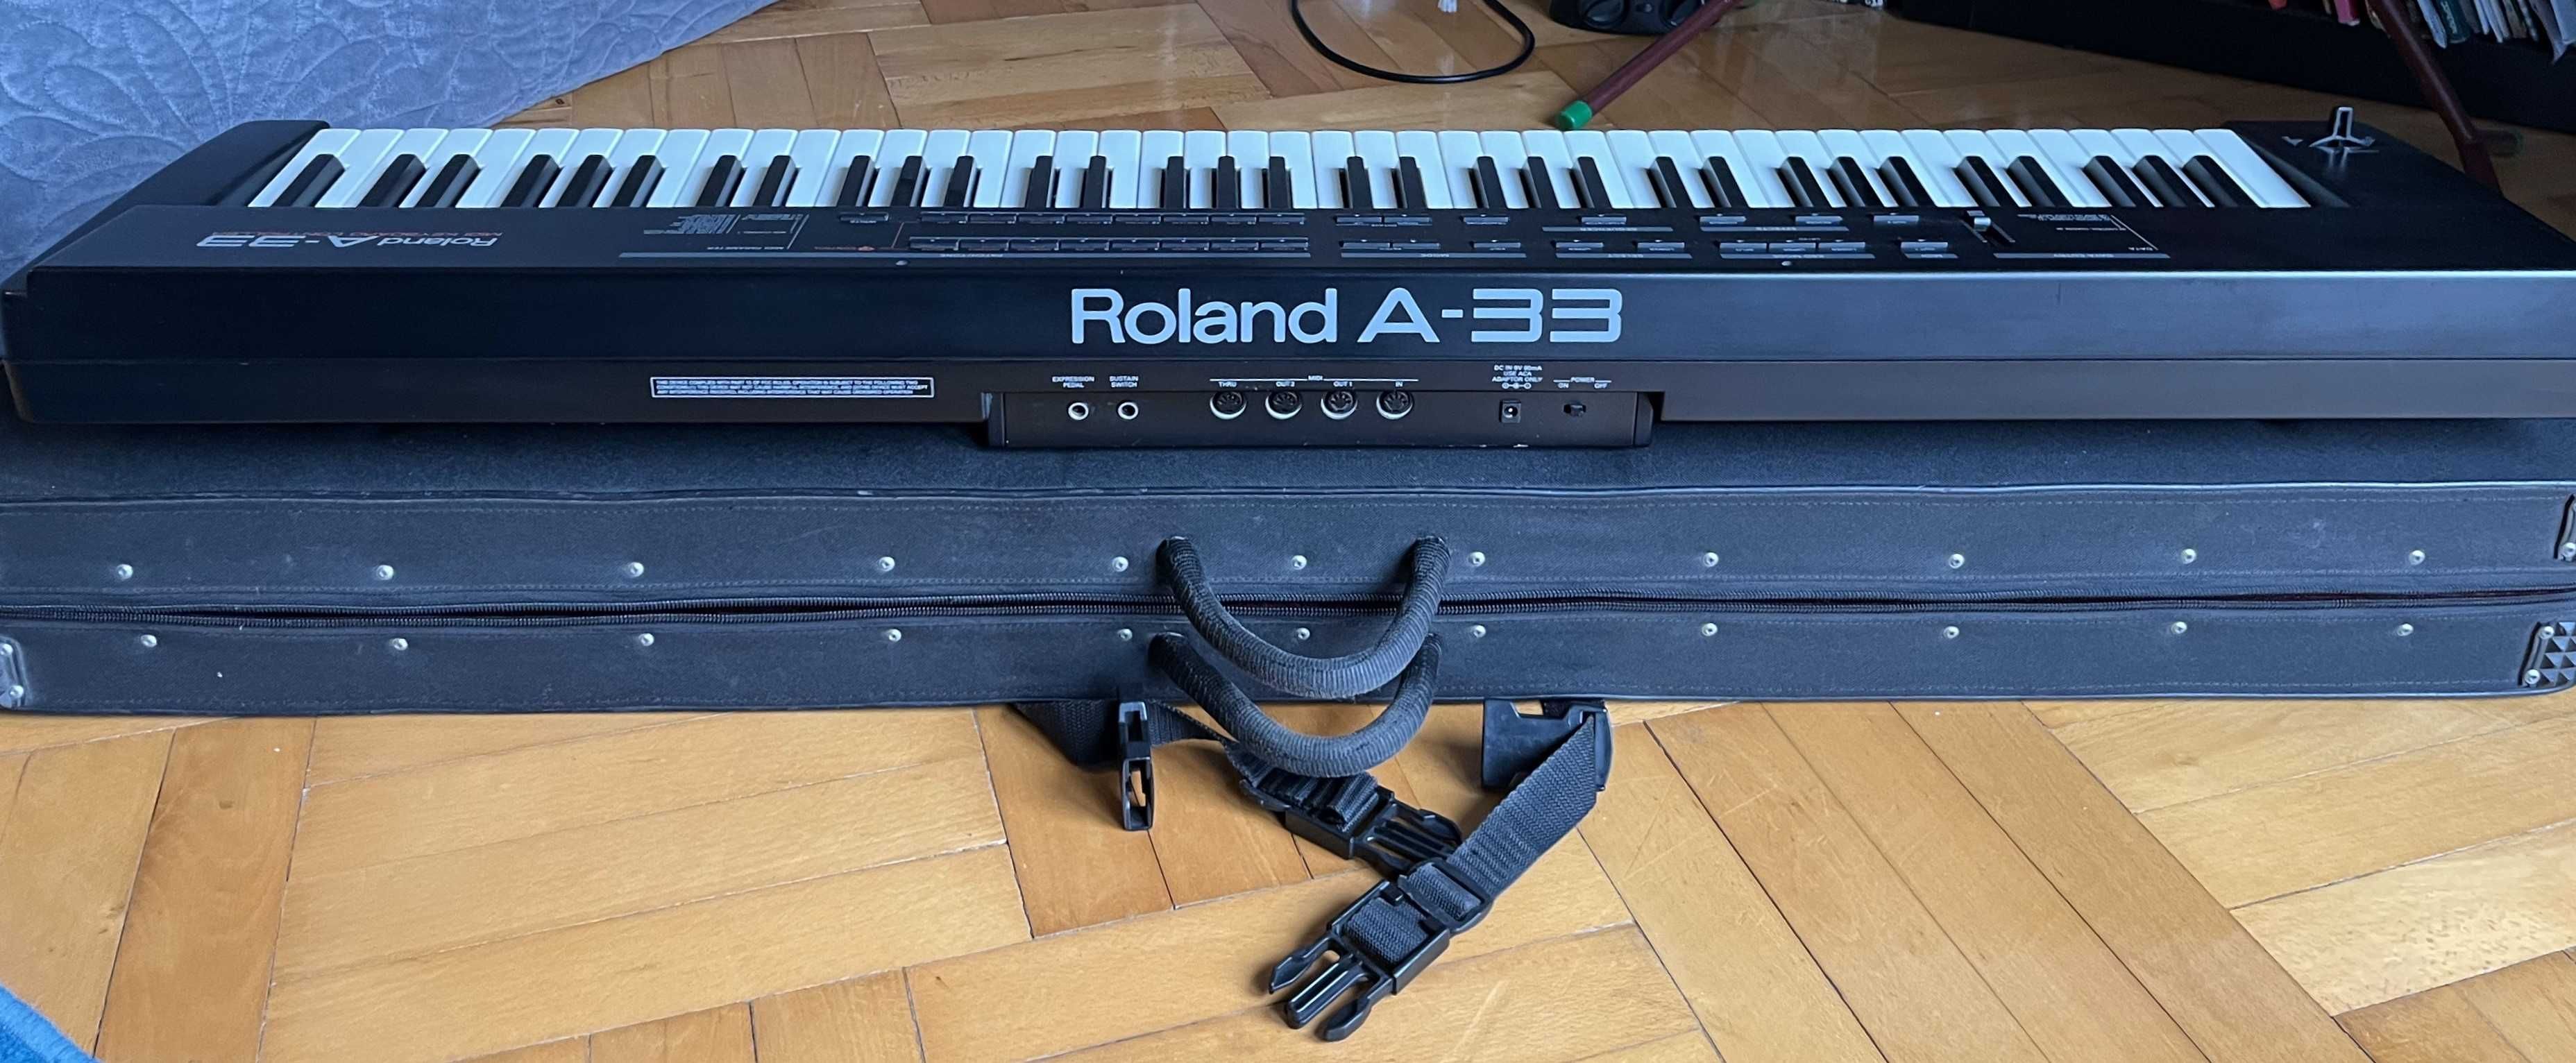 klawiatura sterująca Roland A-33 + futerał.